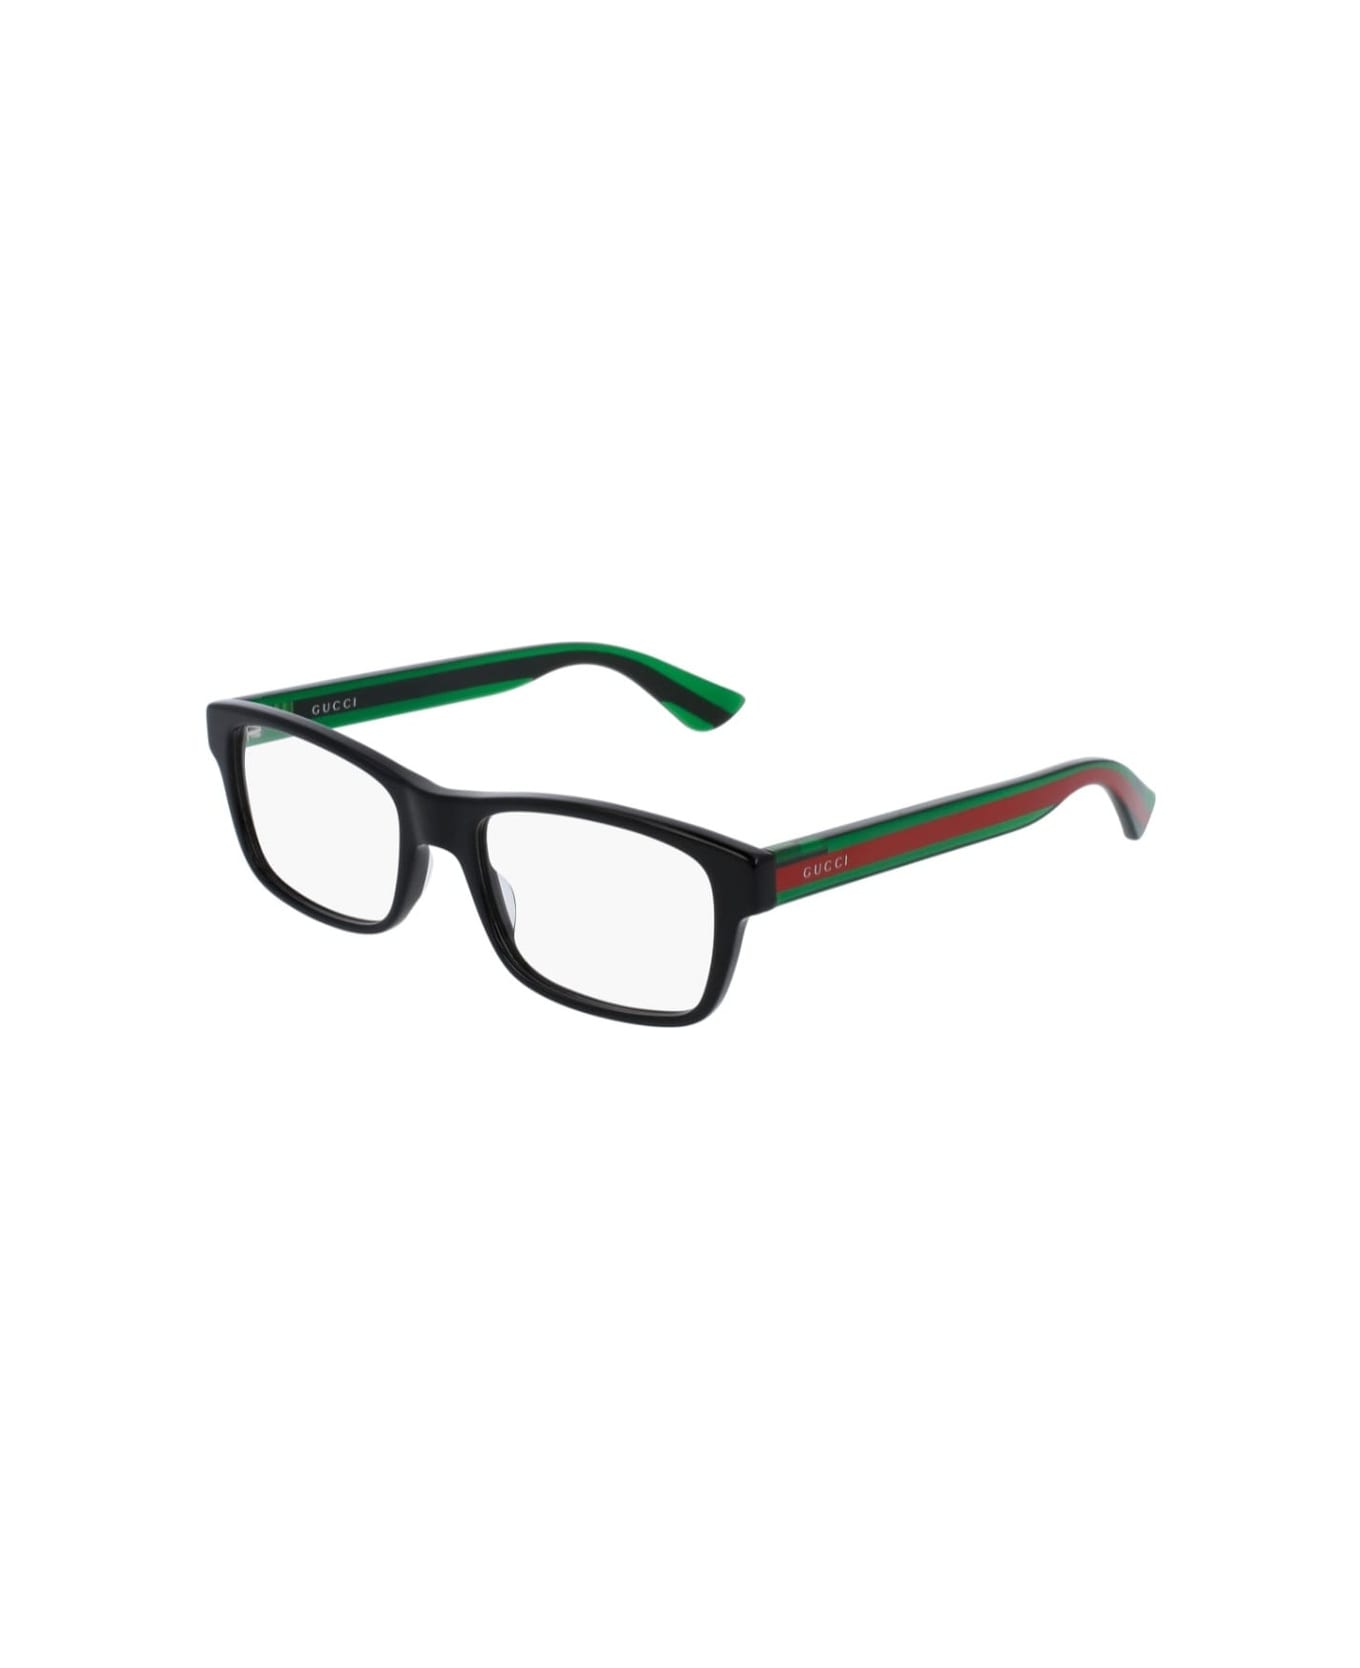 Gucci Eyewear GG0006O 002 Glasses - Nero